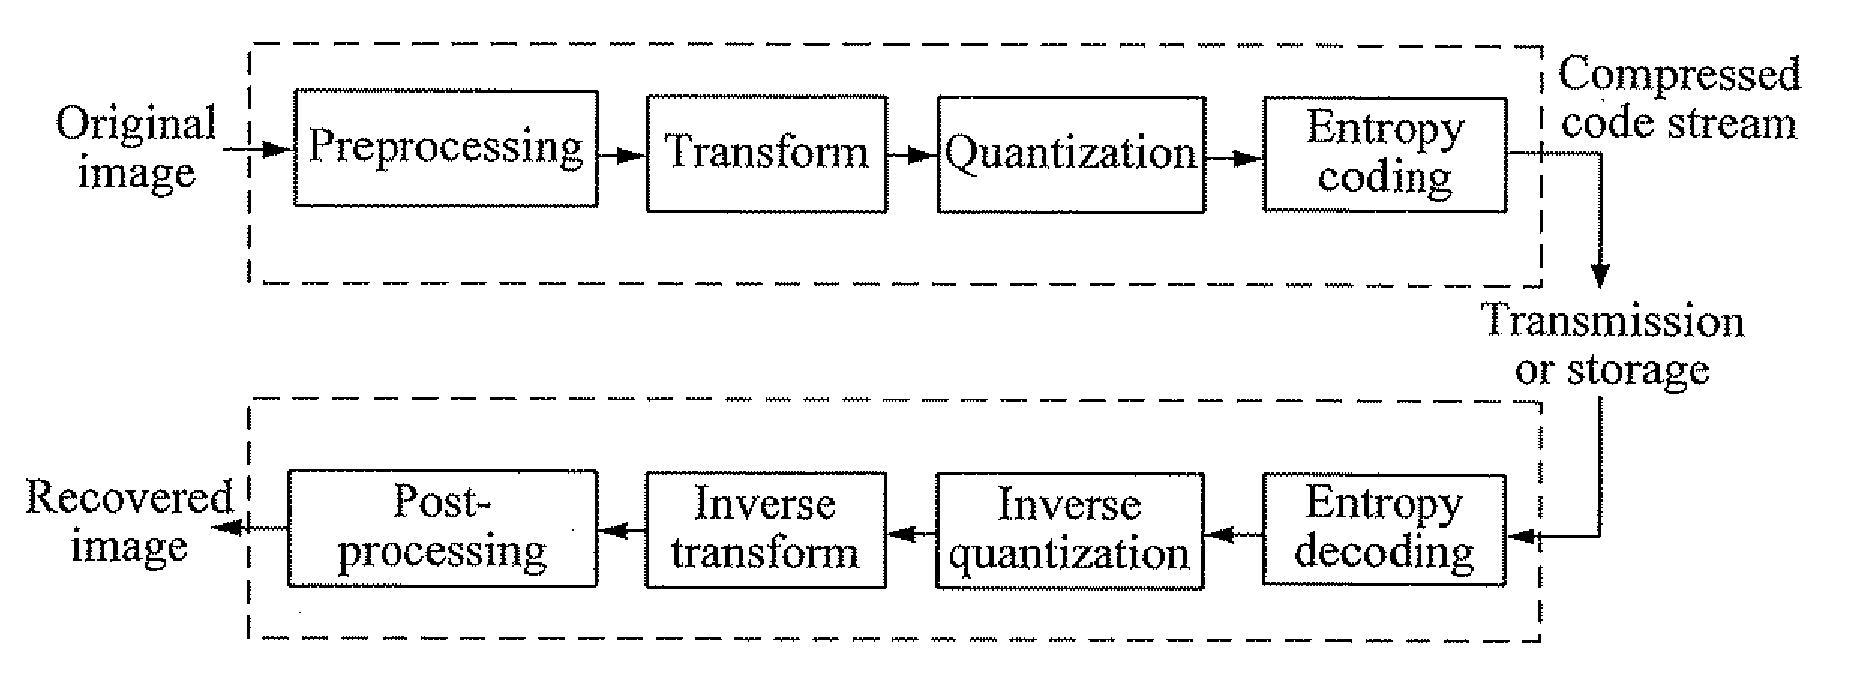 Wavelet coefficient quantization method using human visual model in image compression